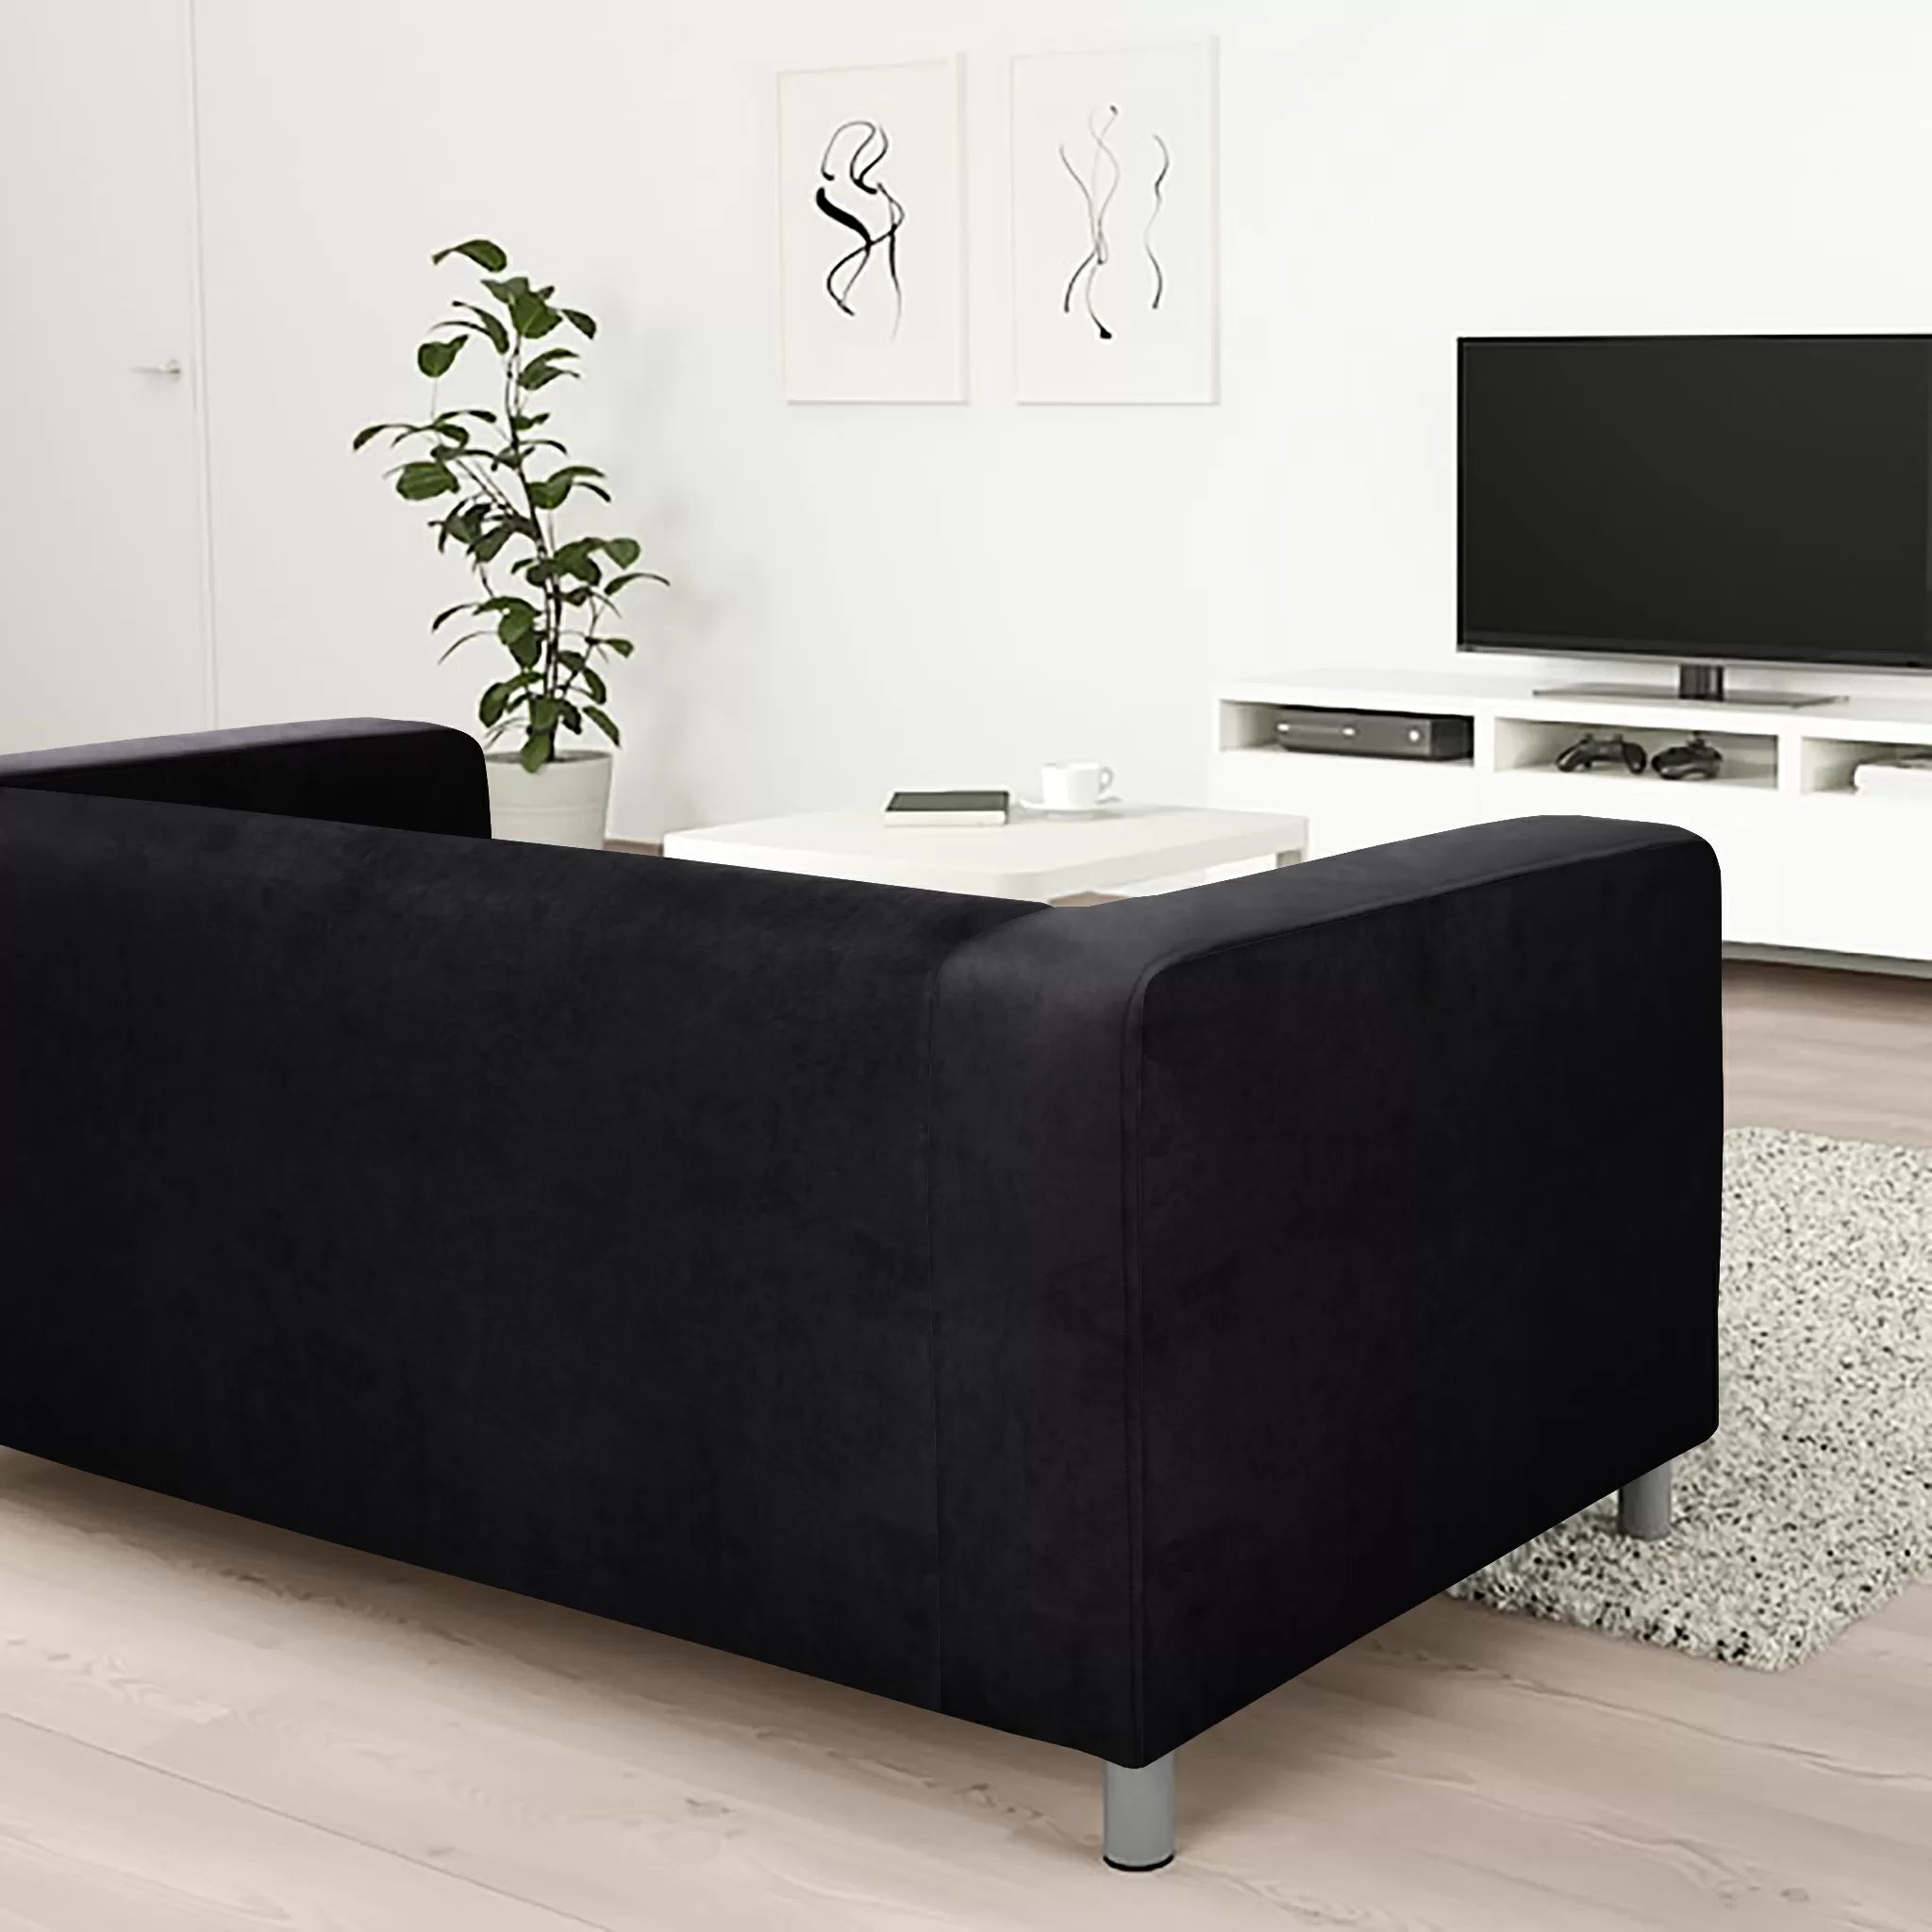 Ikea-Klippan-2-Seater-seat-Replacement-Sofa-cover-black-velvet-fabric-made-to-measure-custom-made